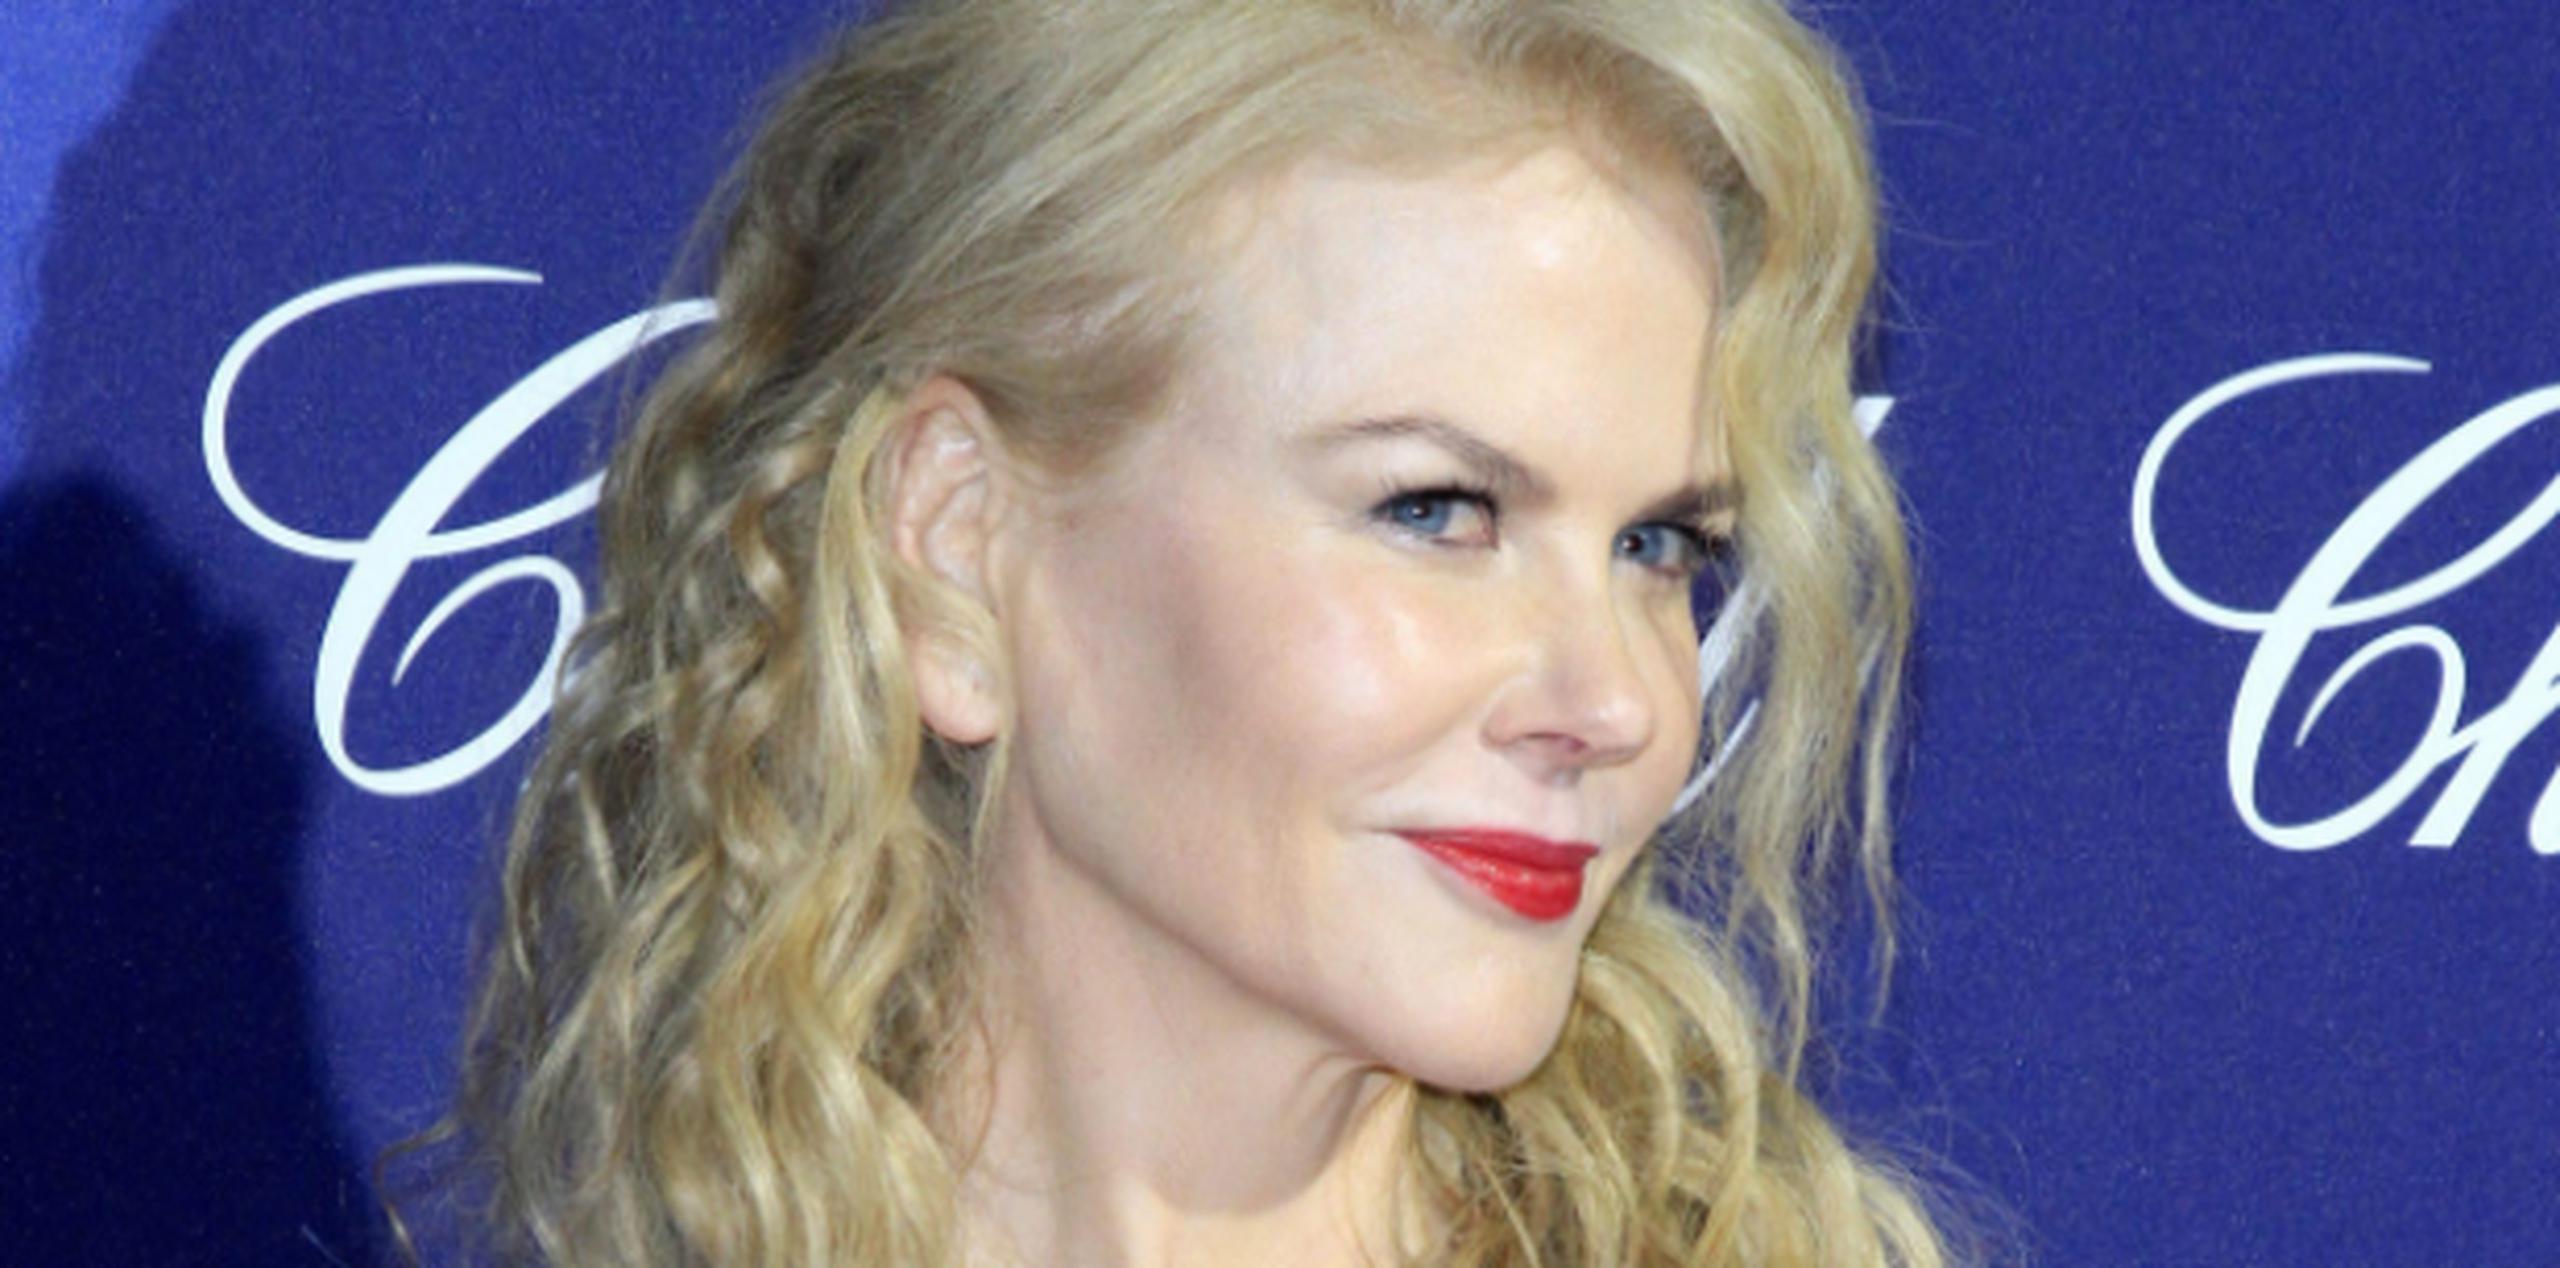 ¿Quería Nicole Kidman imitar Taylor Swift? Juzgue usted. (AP)